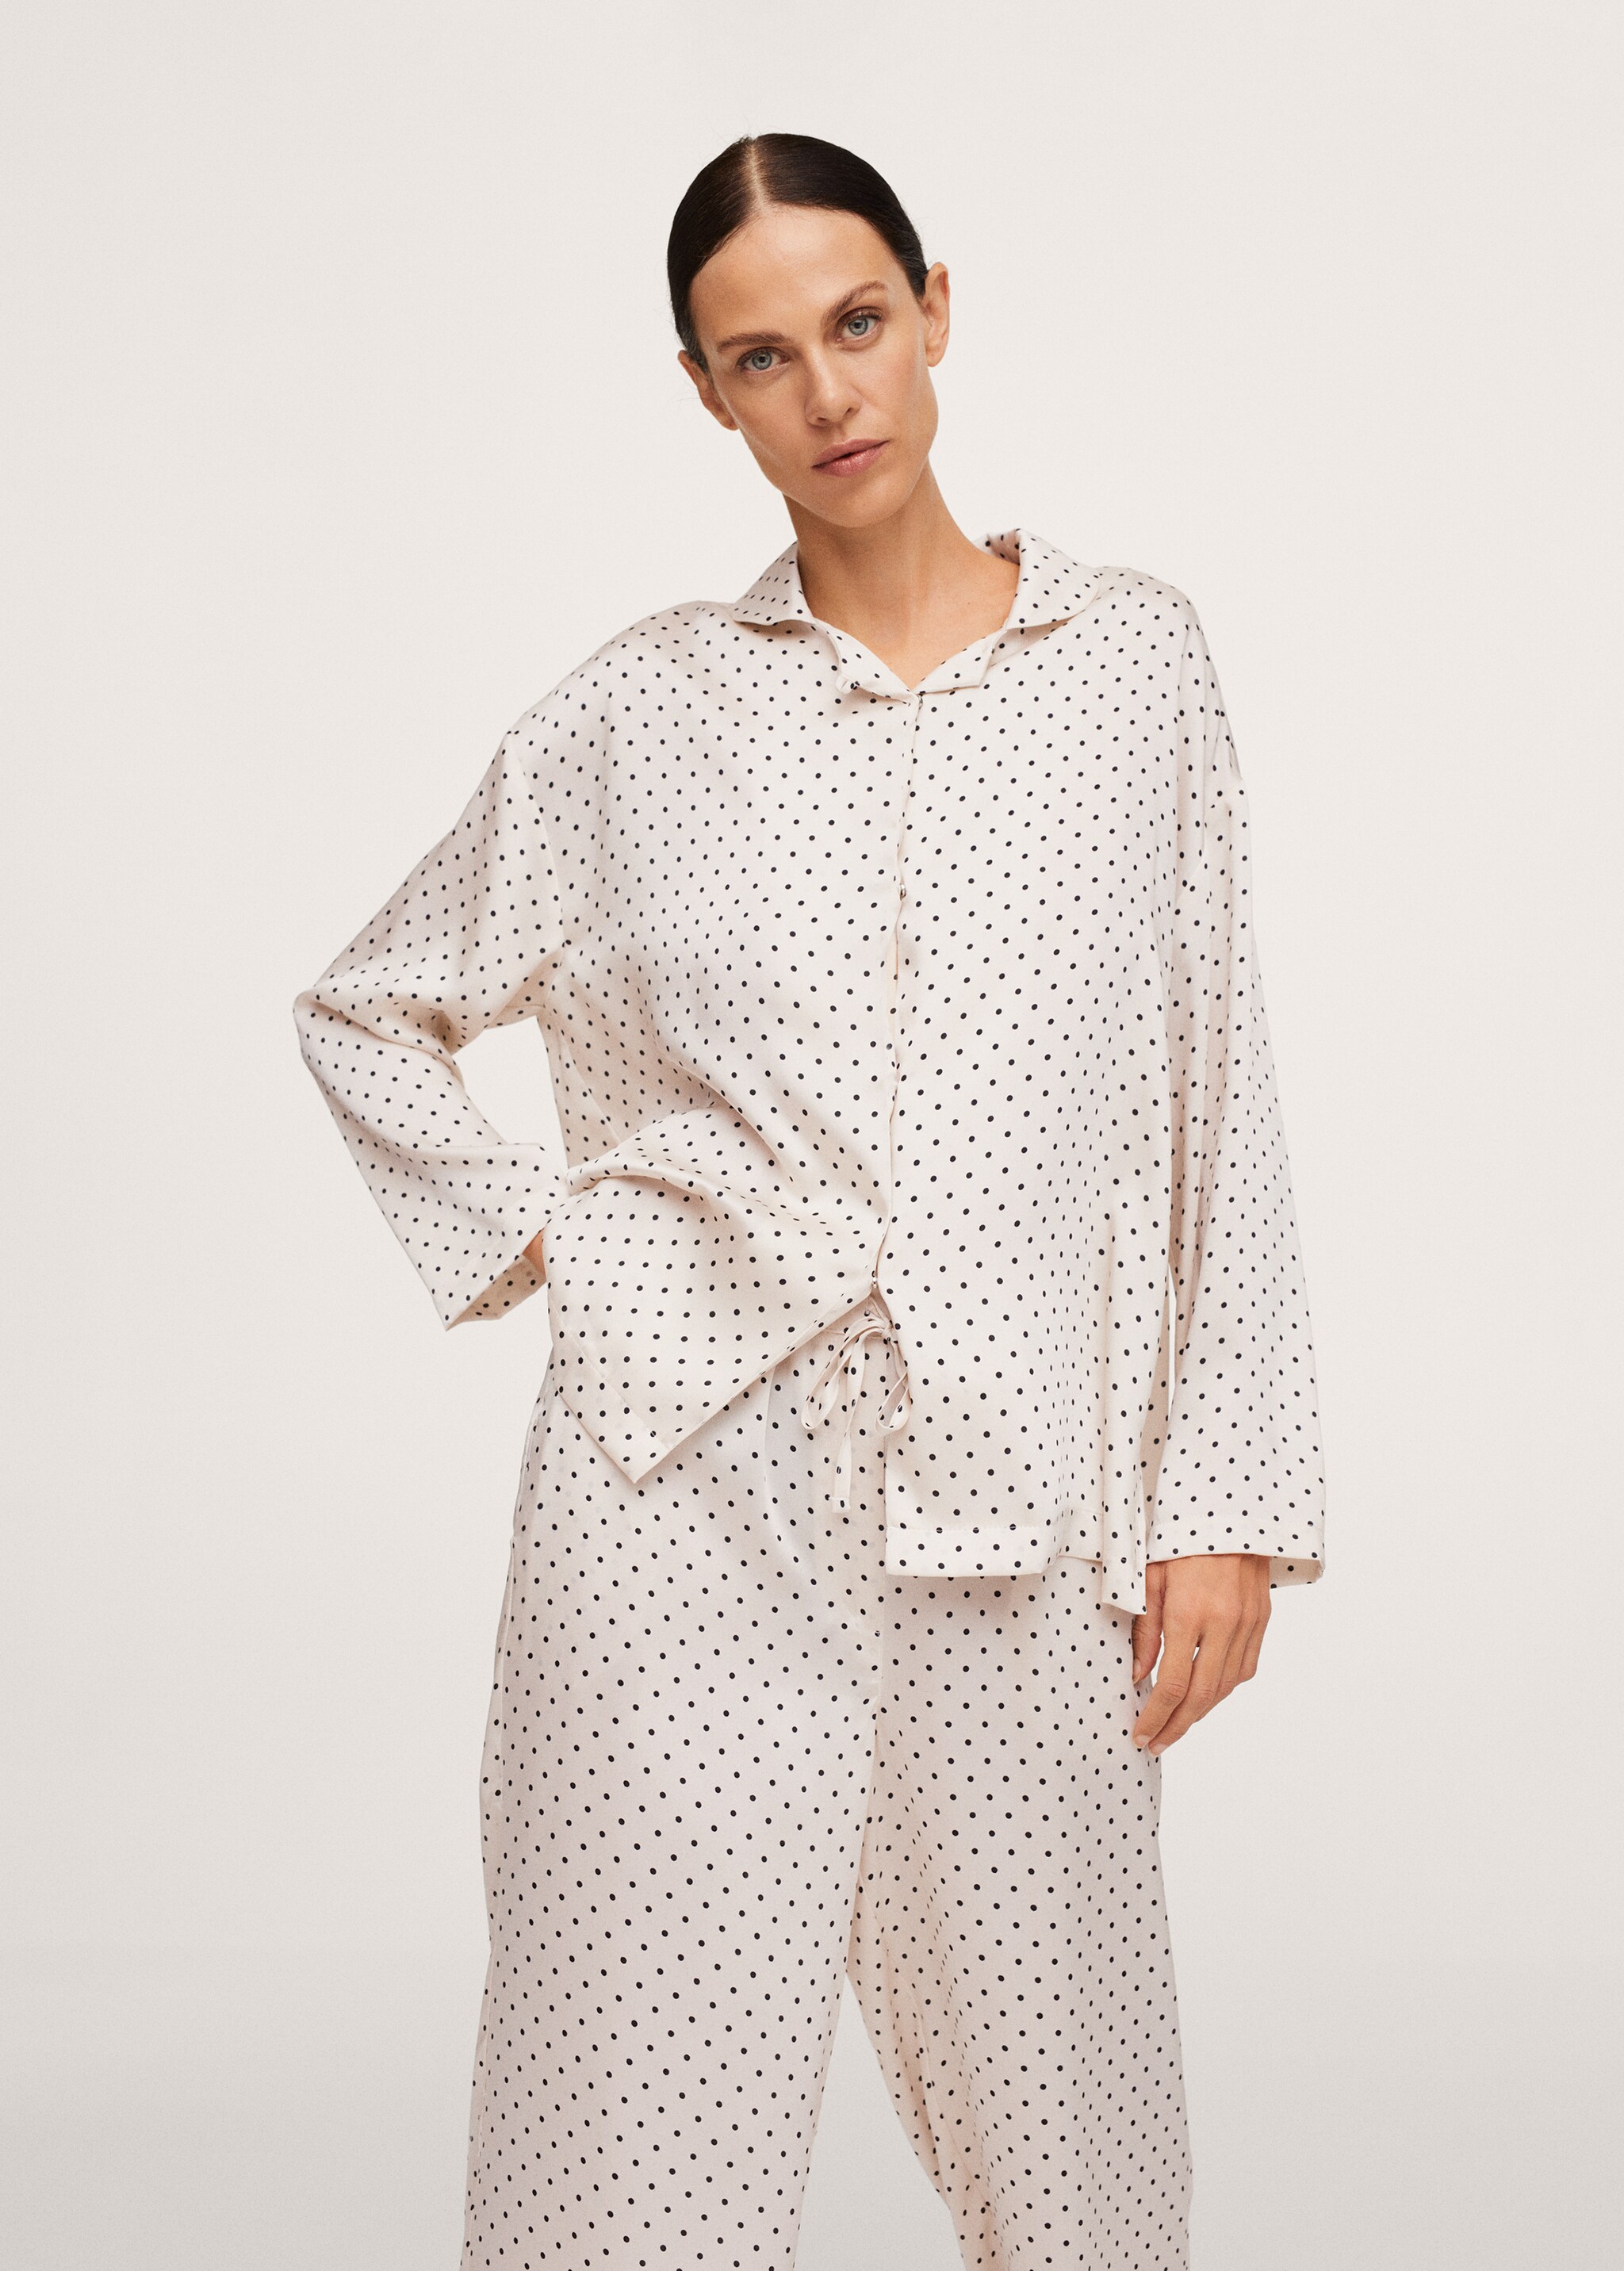 Camisa pijama satinada lunares - Plano medio